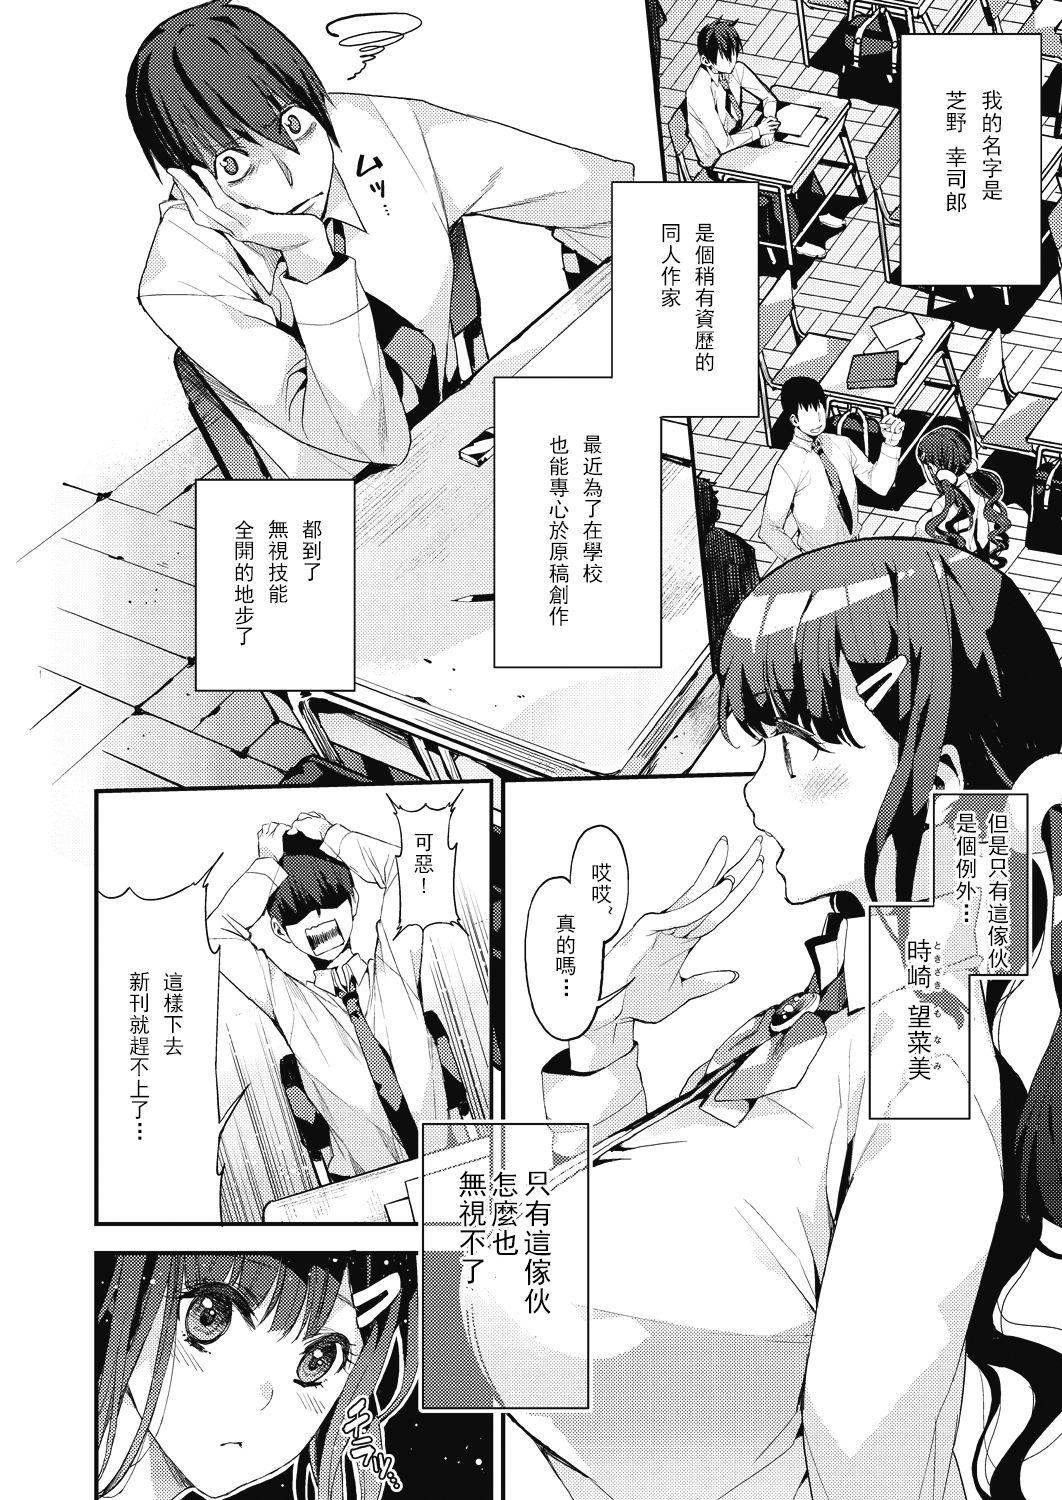 Three Some mutsumajii fan Transsexual - Page 3